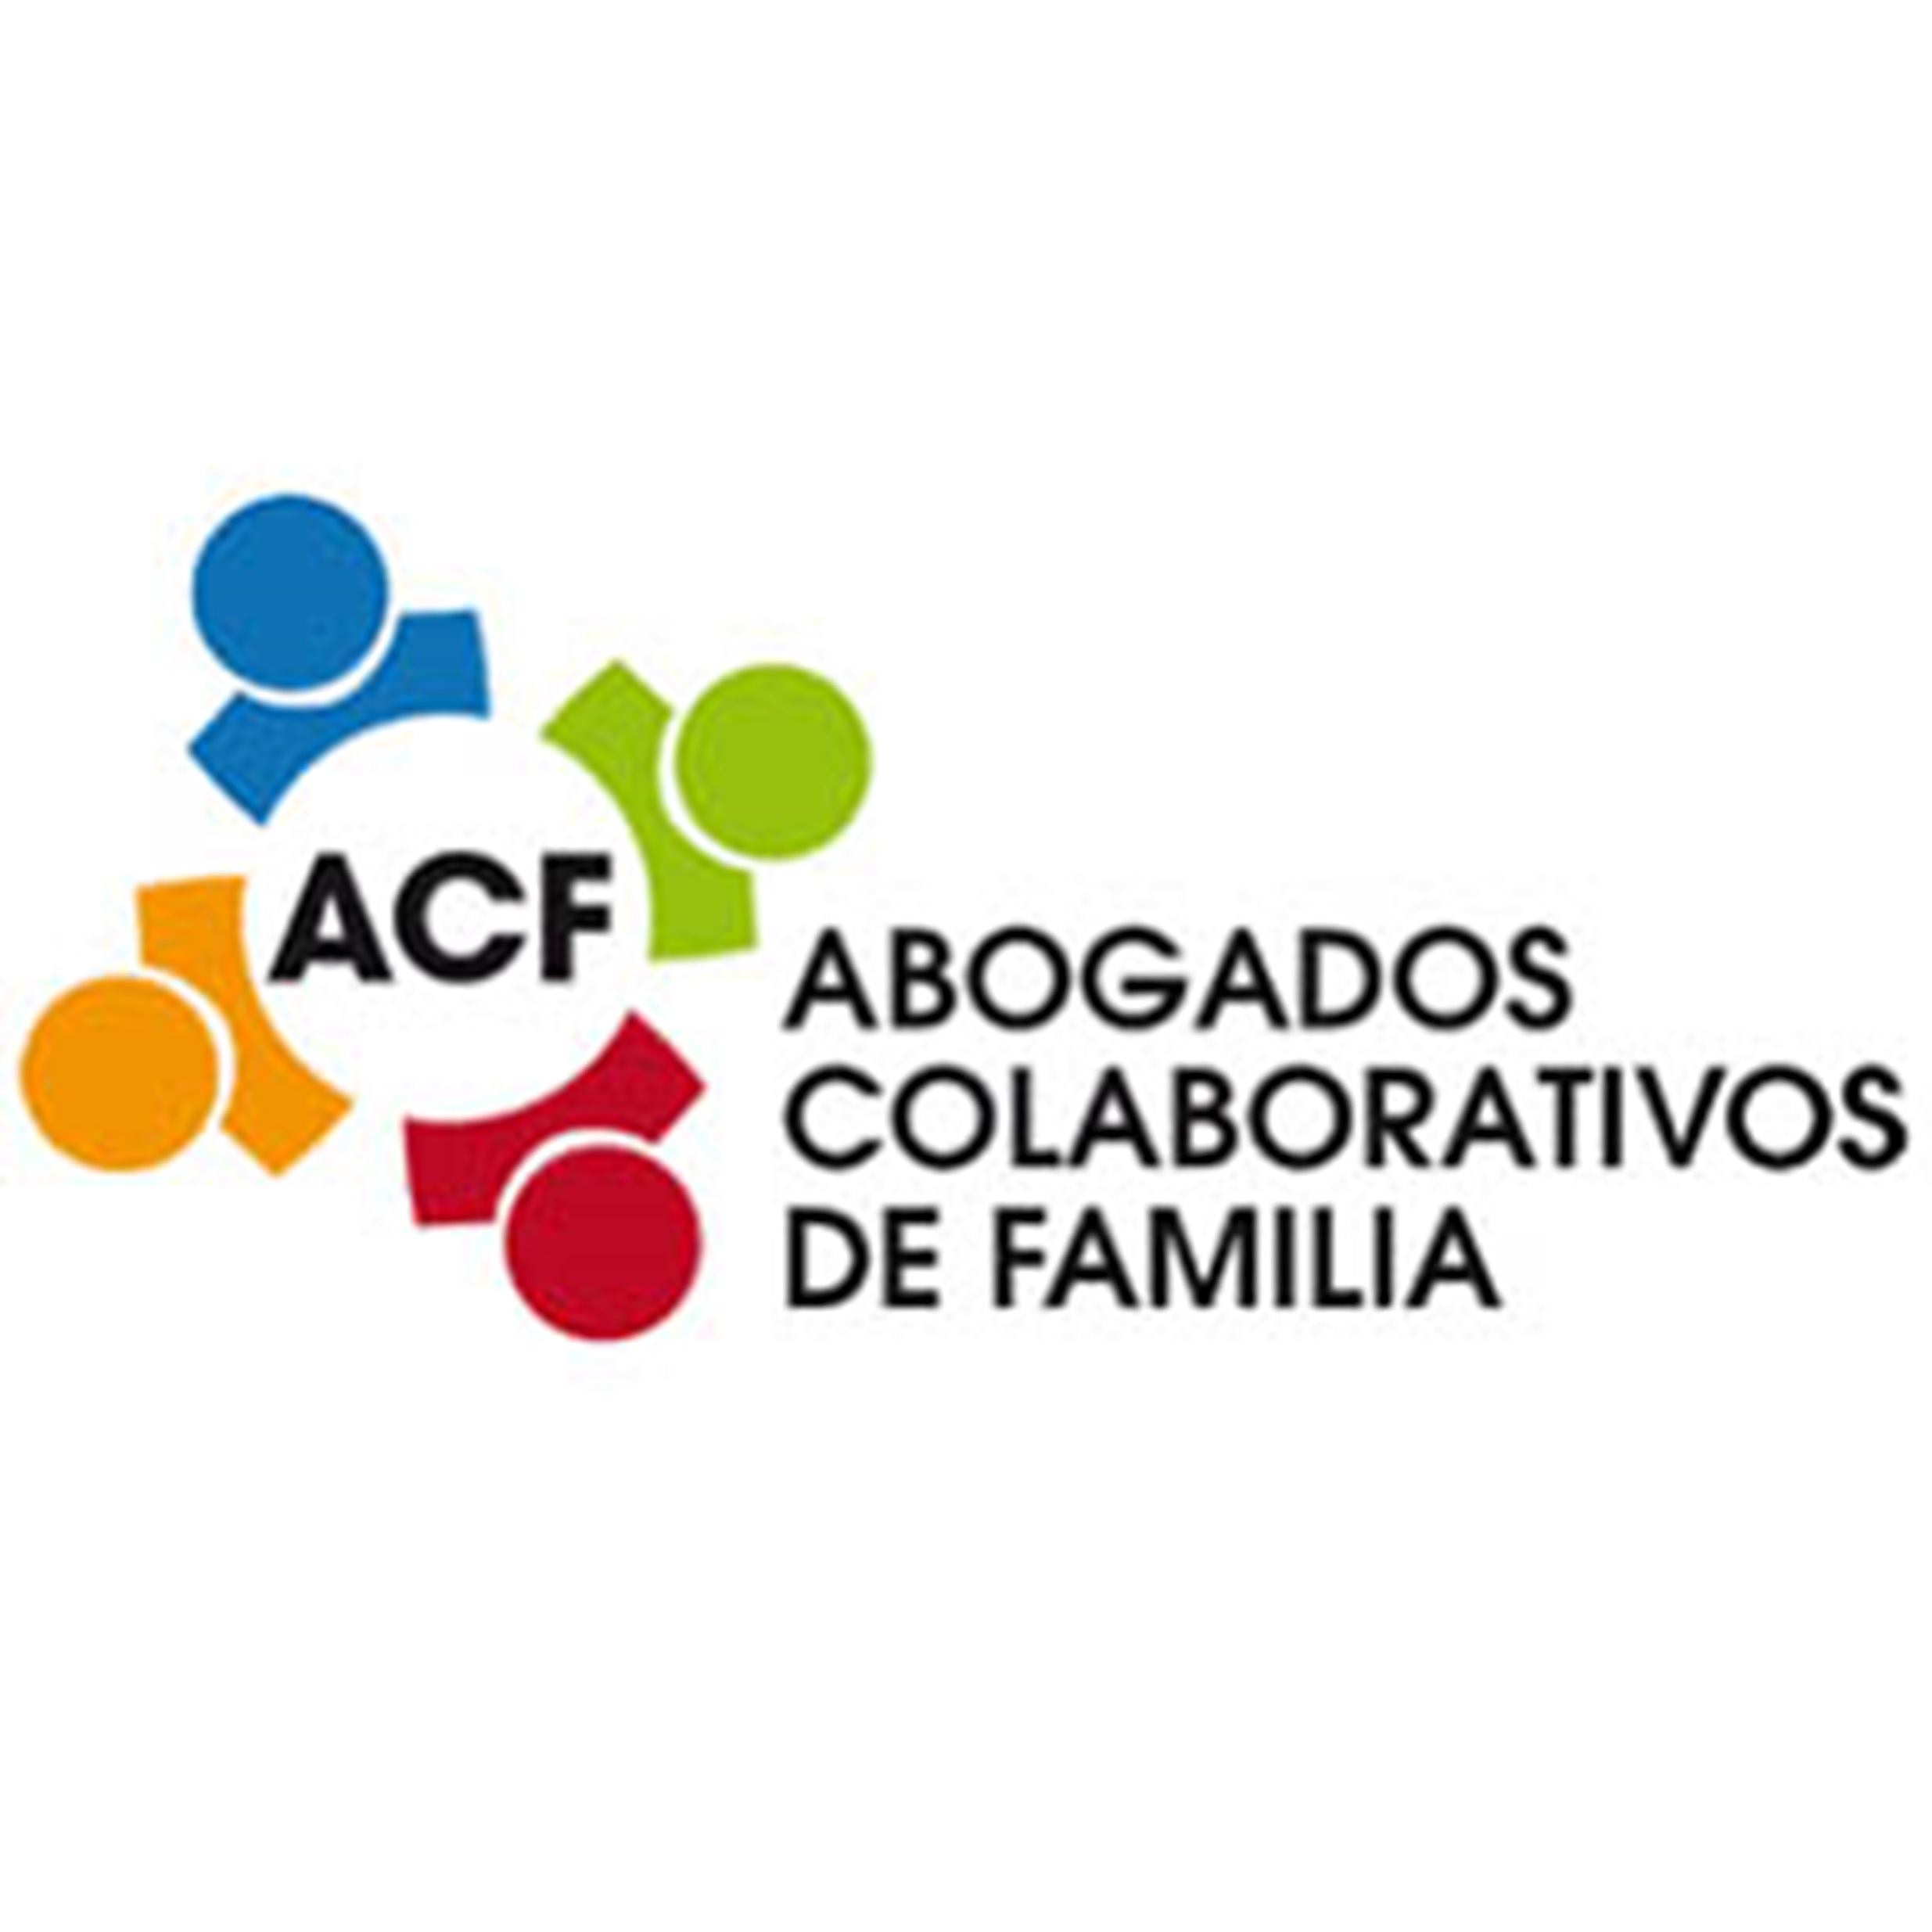 ACF Abogados Colaborativos de Familia